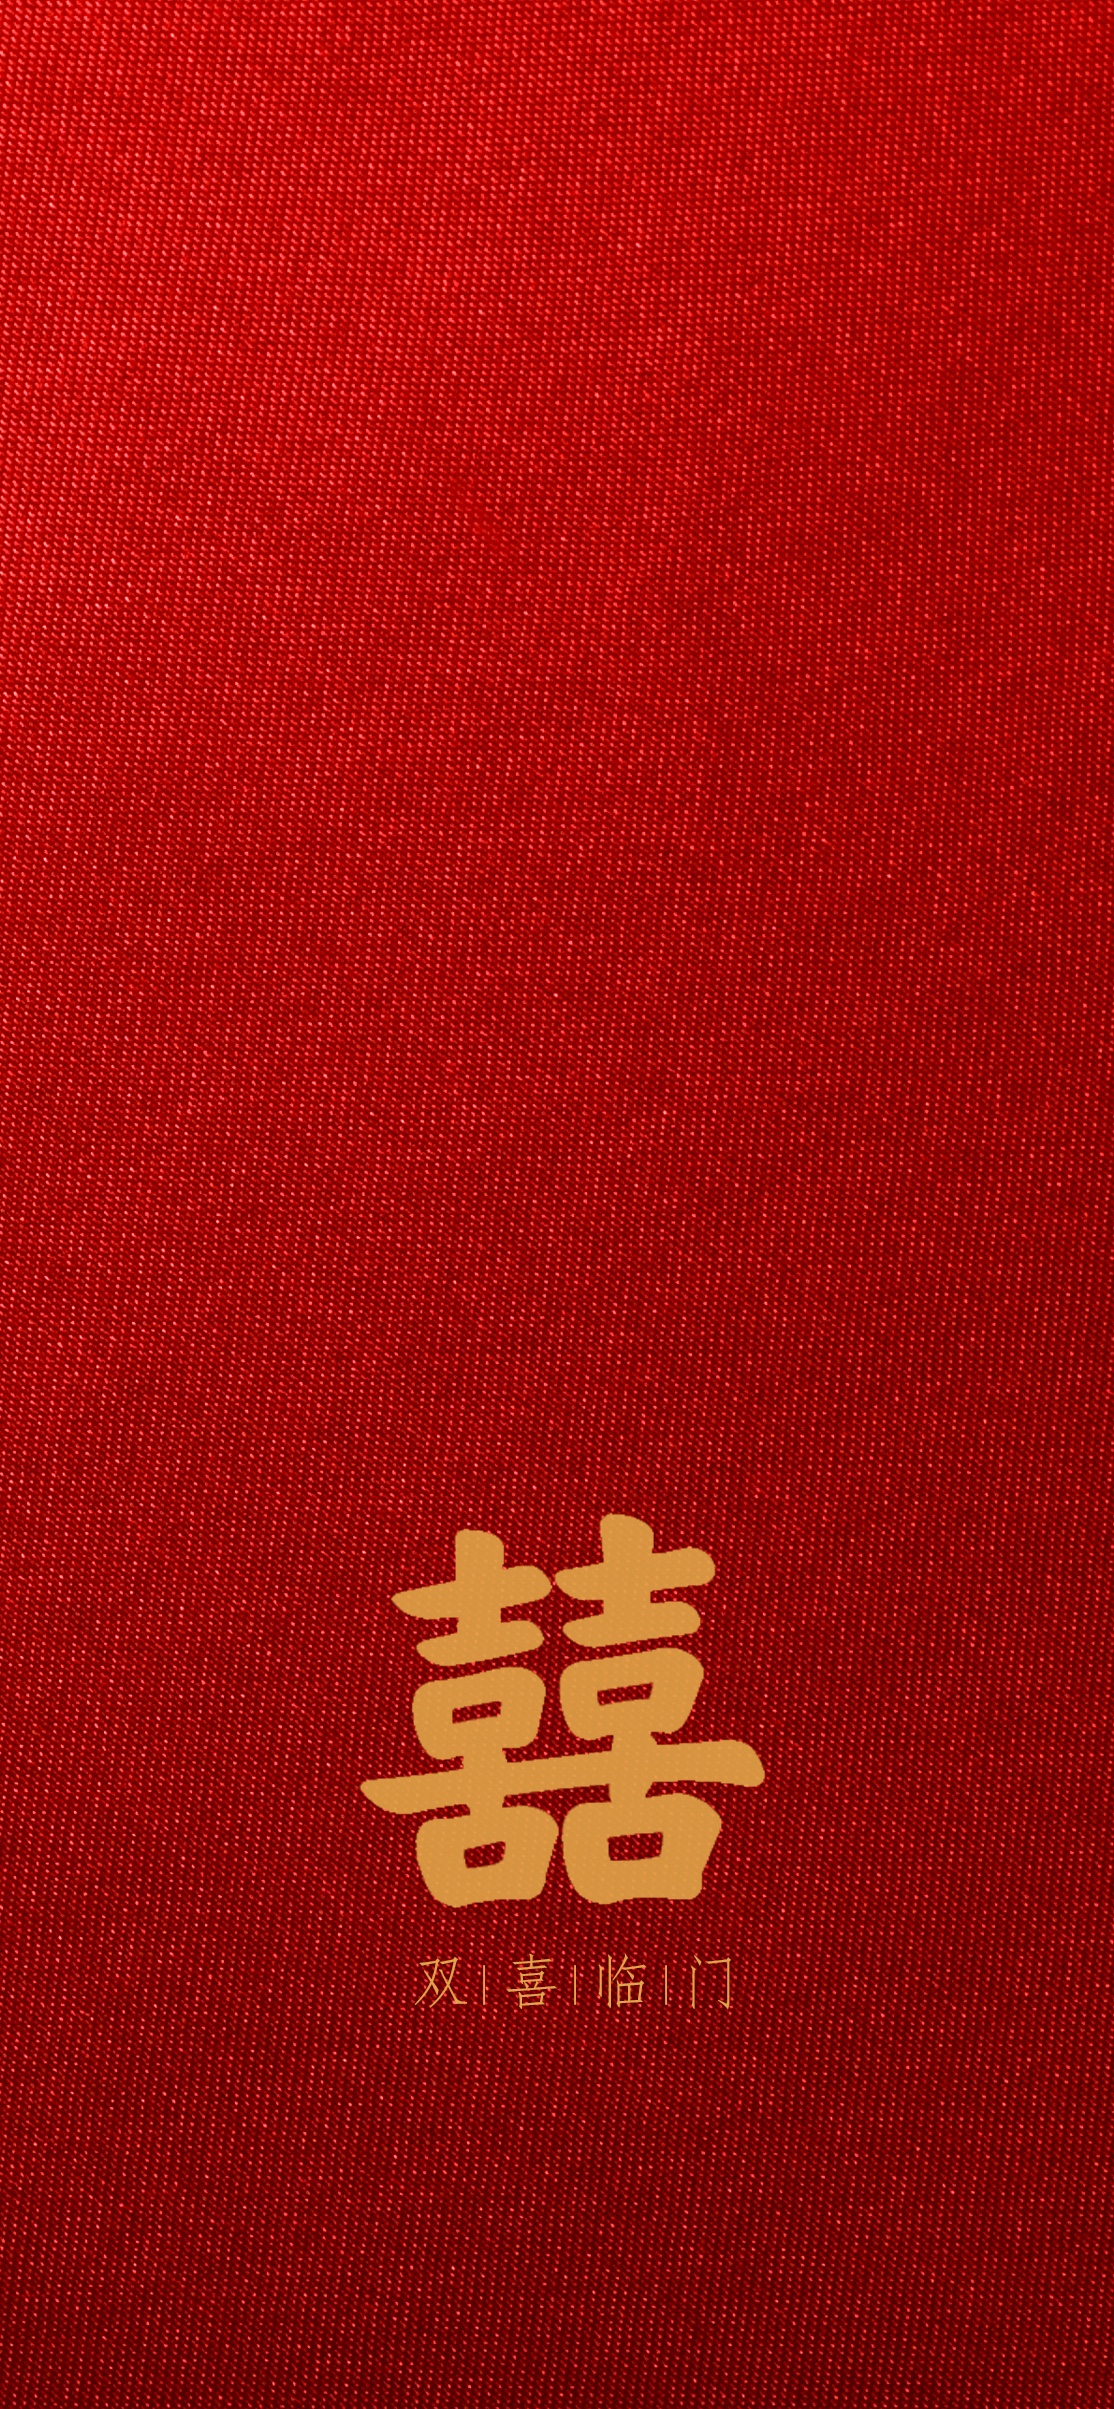 General 1114x2409 minimalism simple background kanji